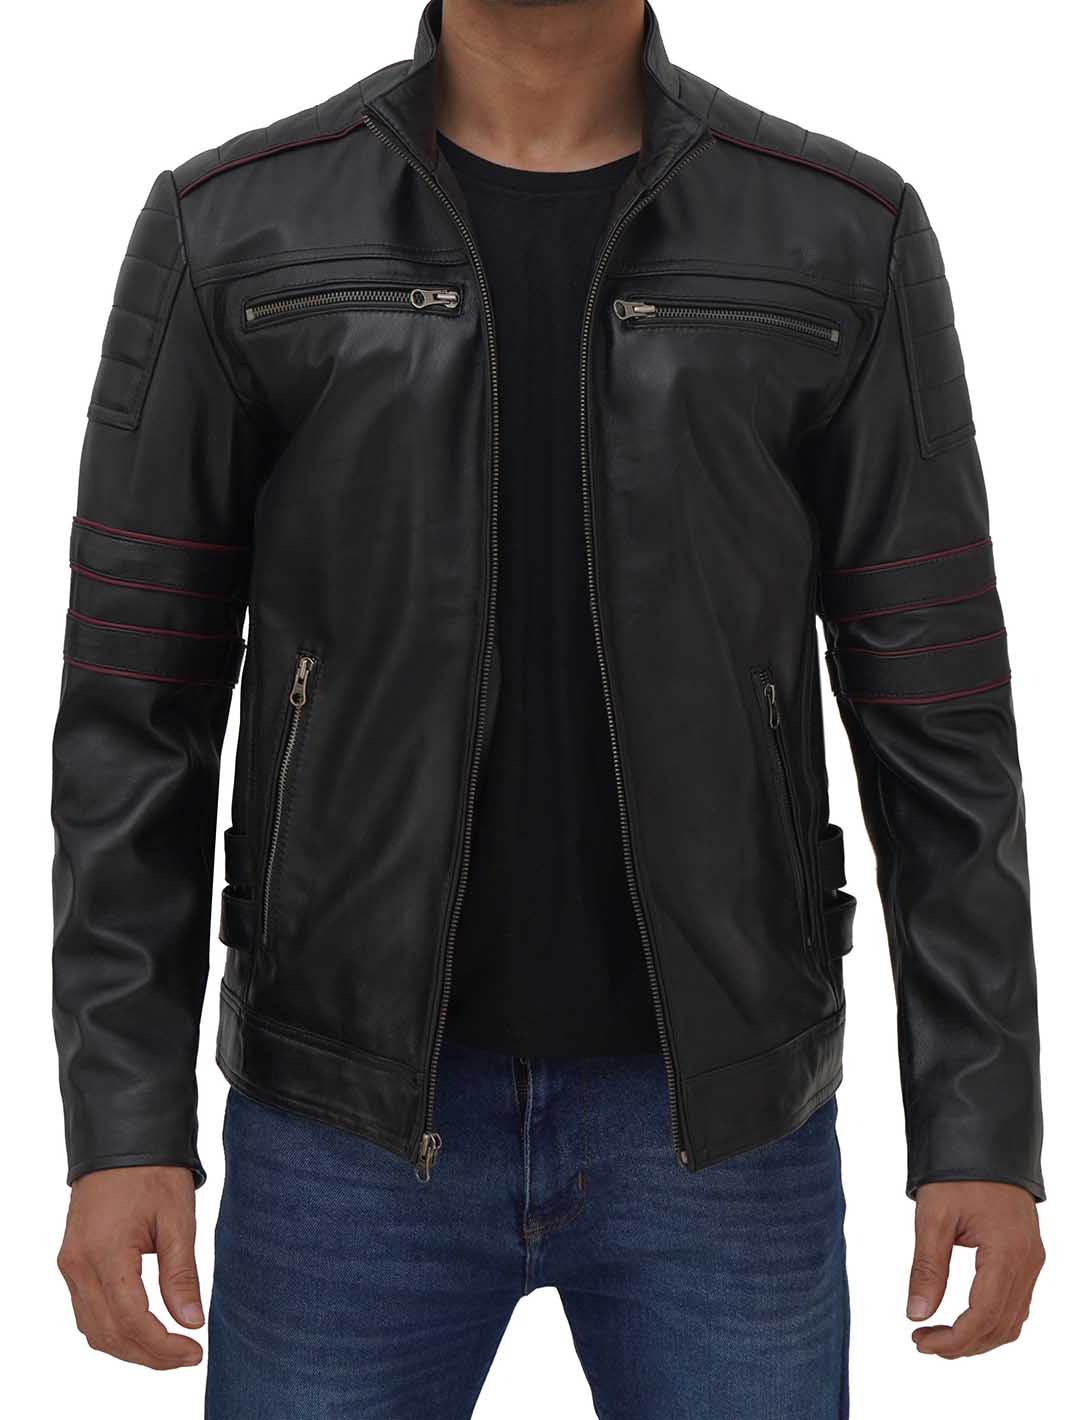 Stylish Mens Black Leather Jacket – Shop Now at Decrum – Page 2